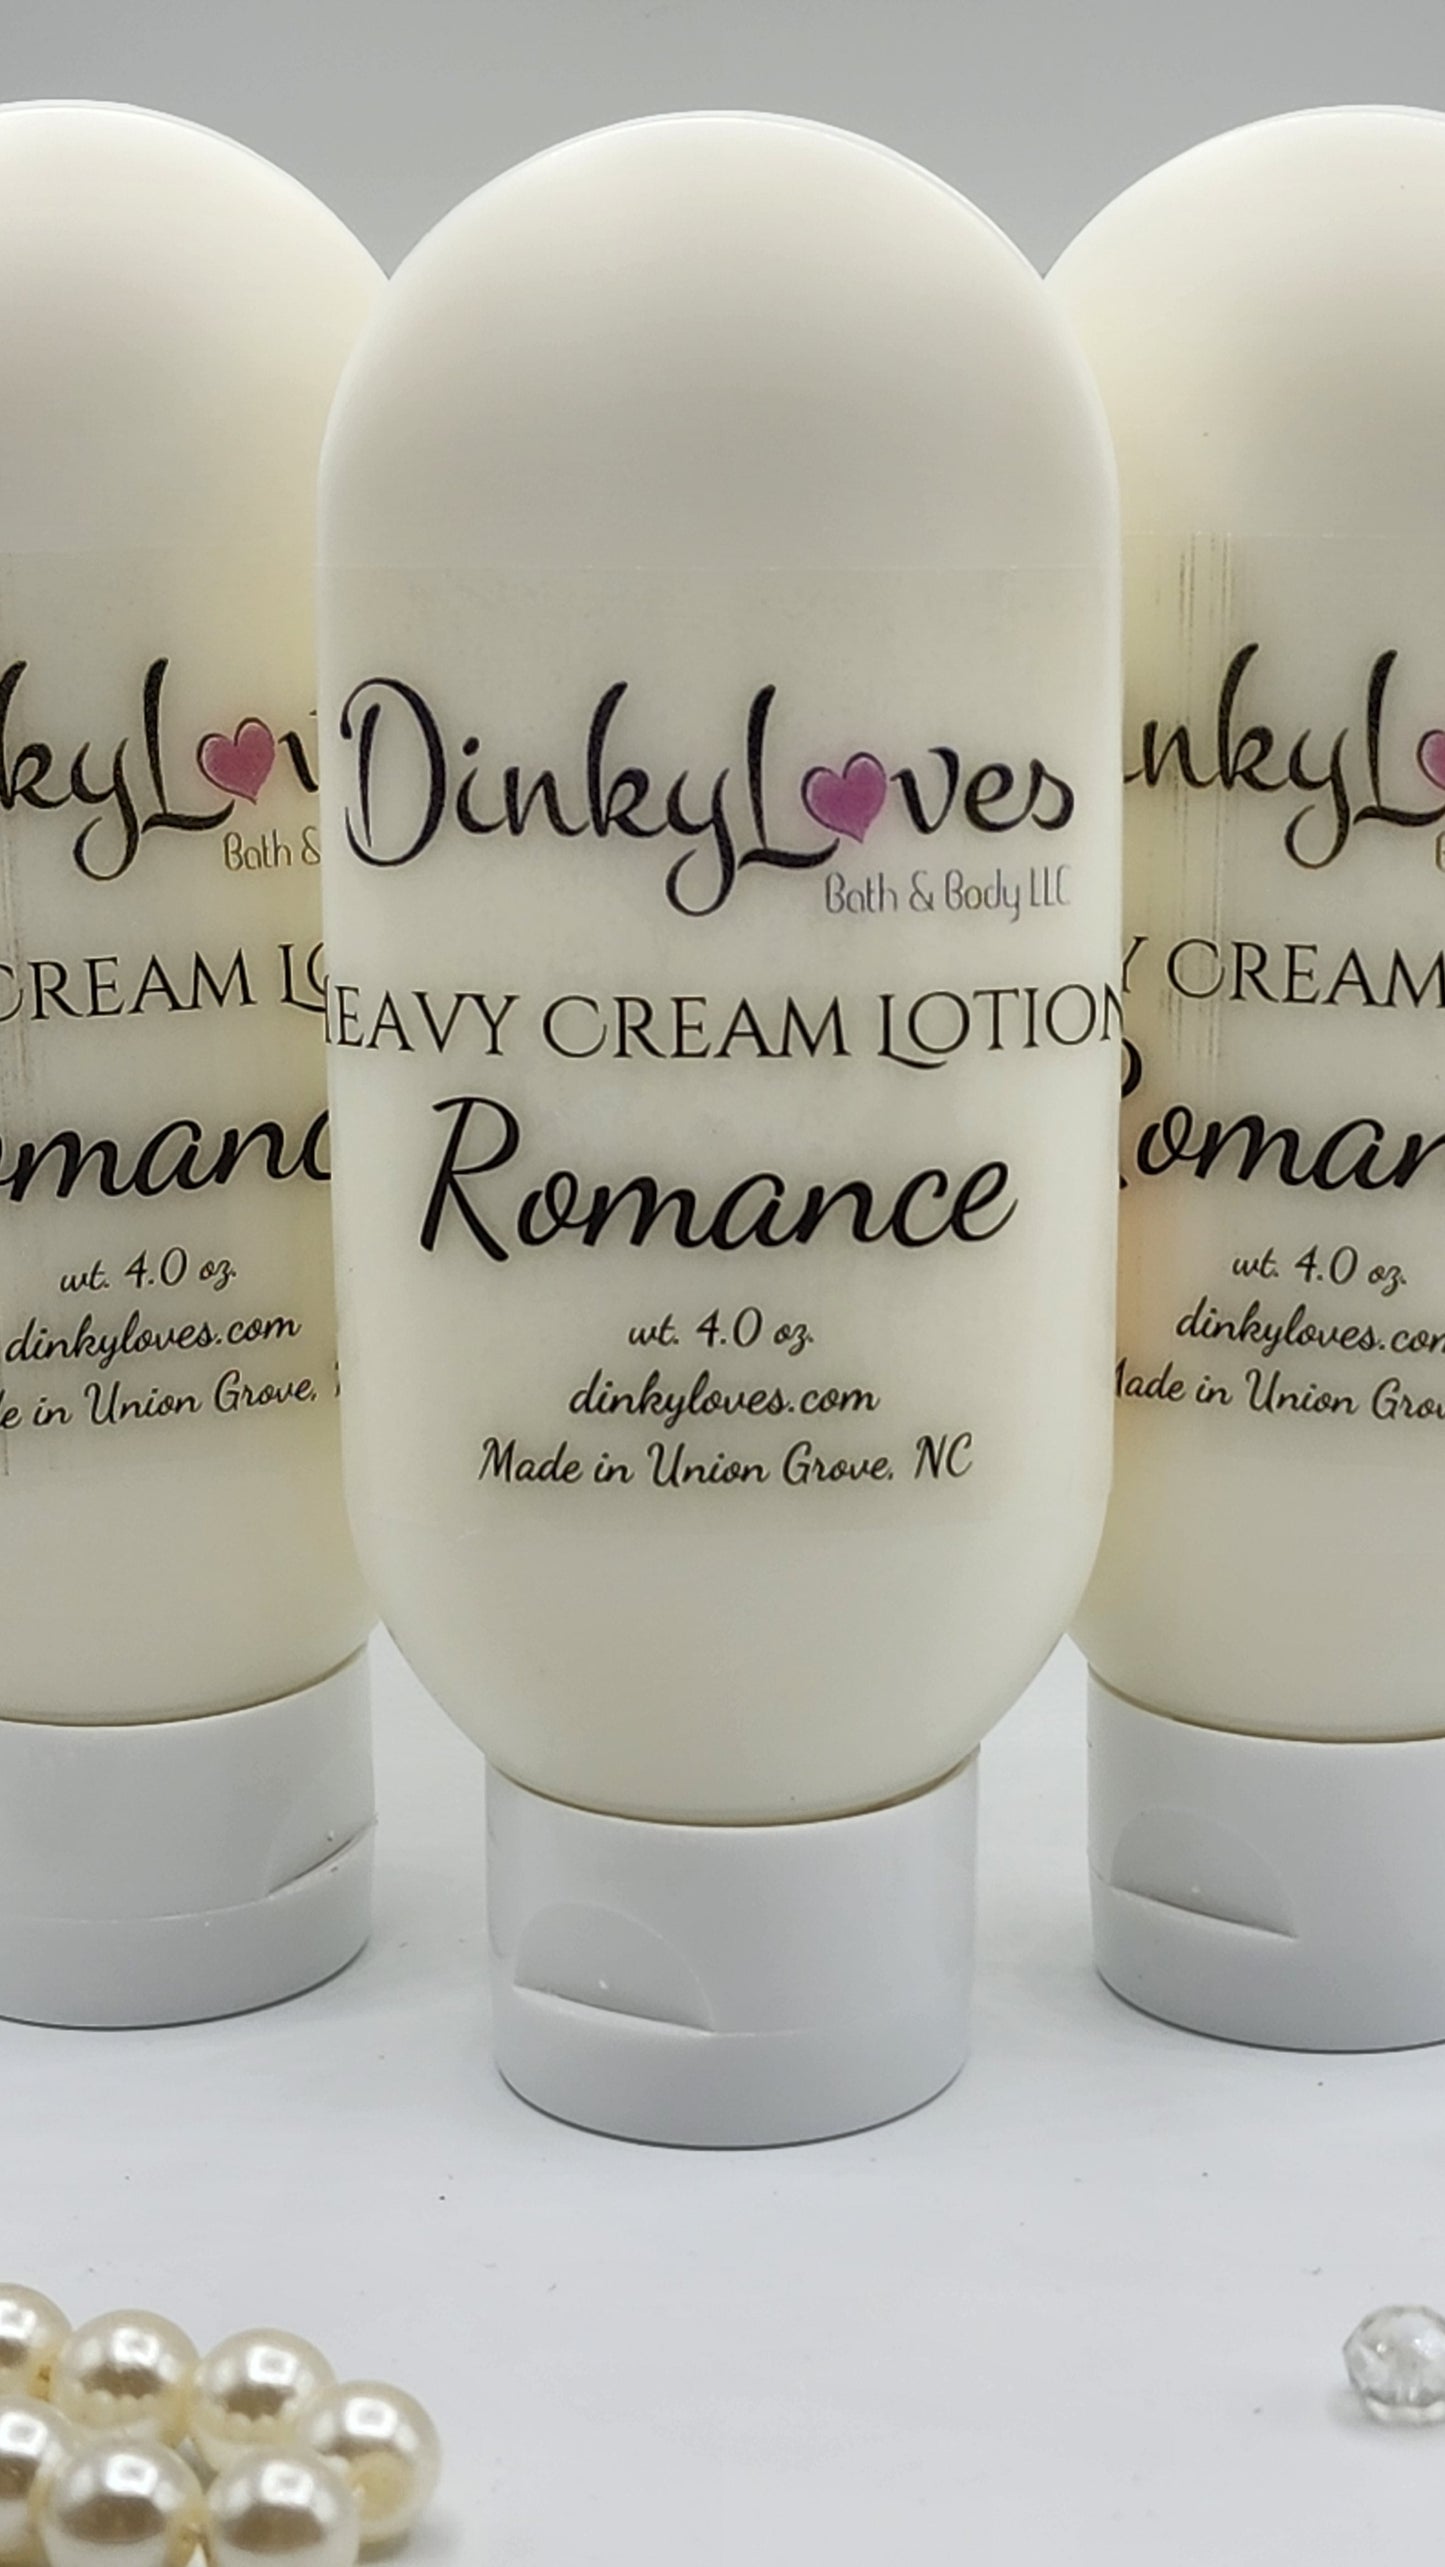 ROMANCE Heavy Cream Lotion / Handmade Lotion / Creamy Lotion / Purse Size Lotion